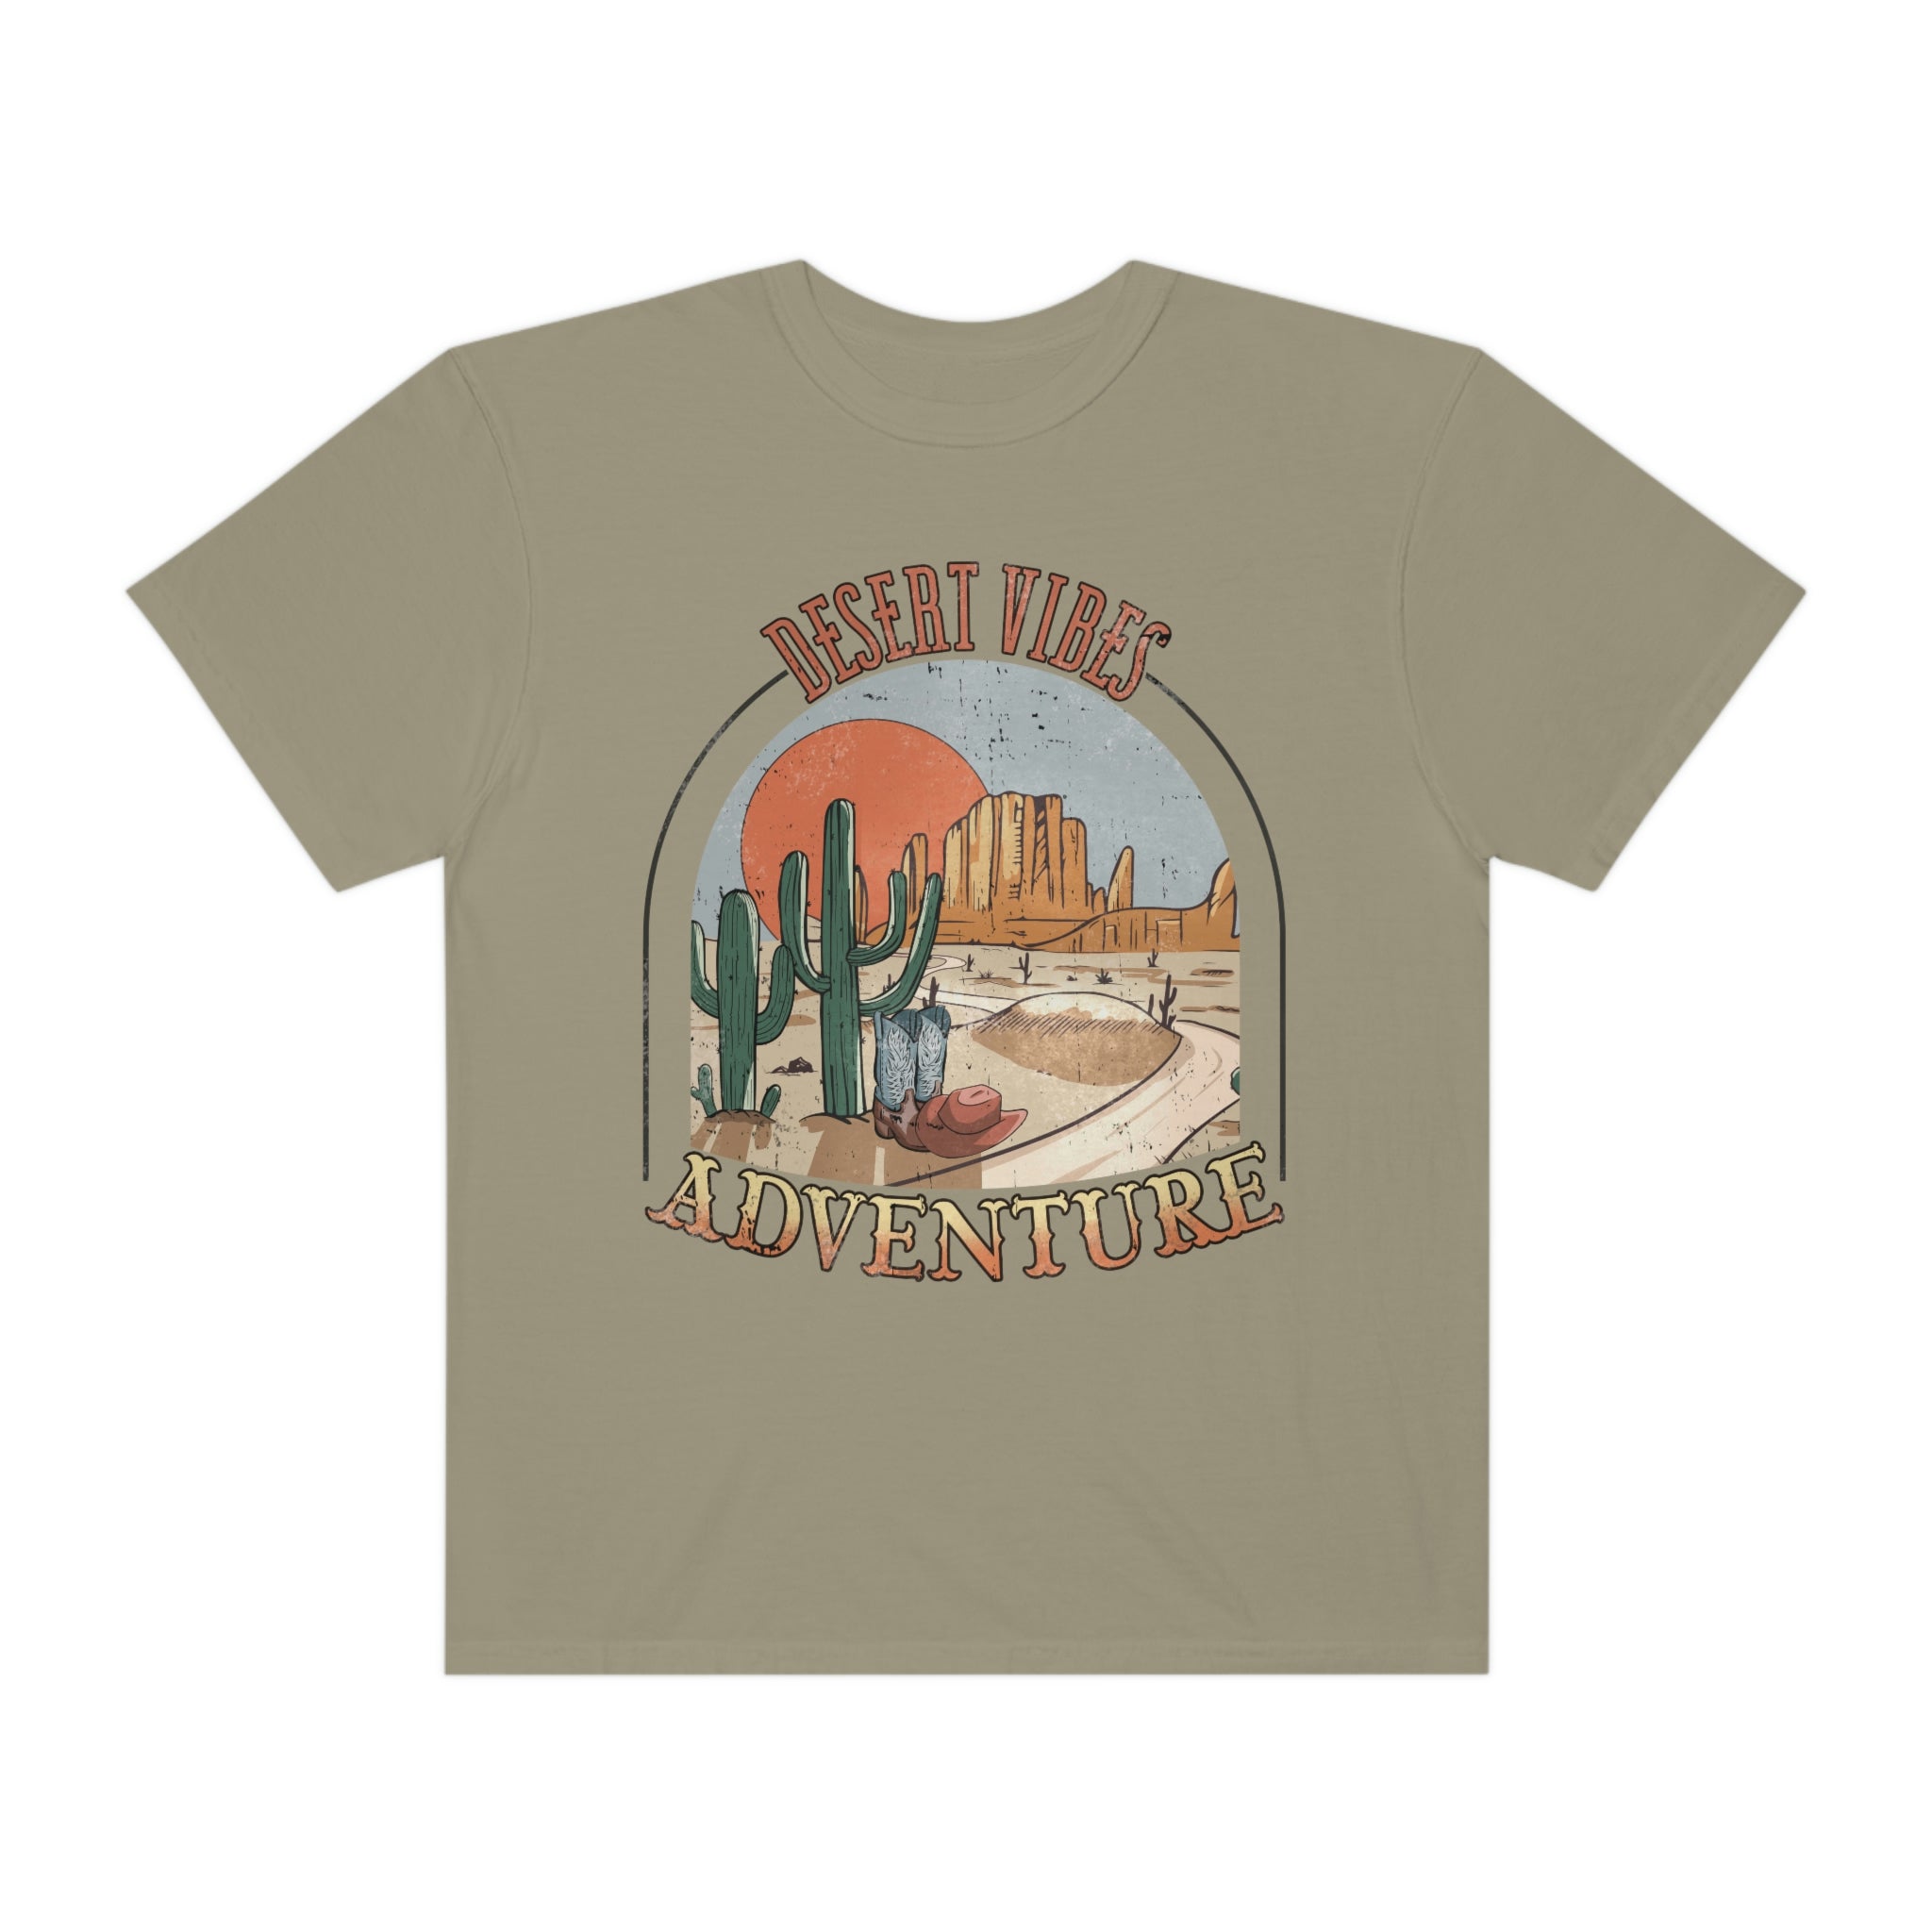 Retro Western Graphic Hoodie / Desert Vibes Clothing / Wild 